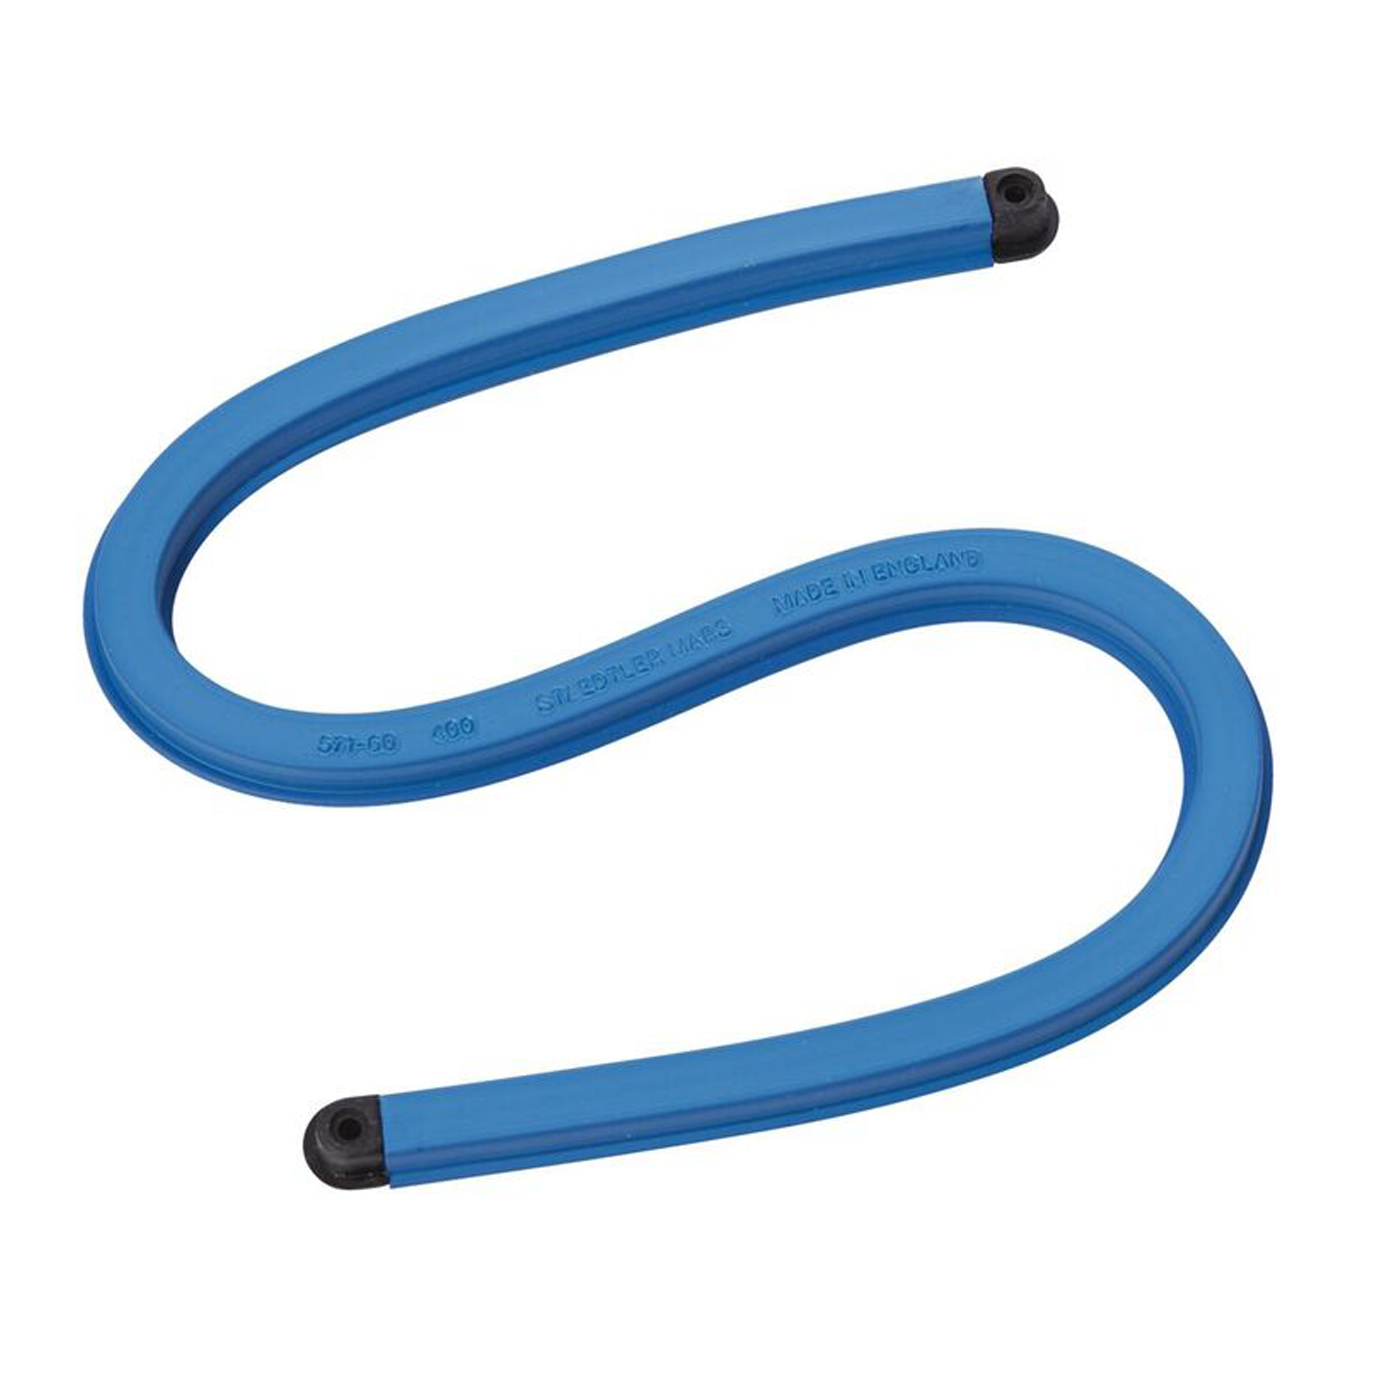 Staedtler Flexible Curve Blue 40cm